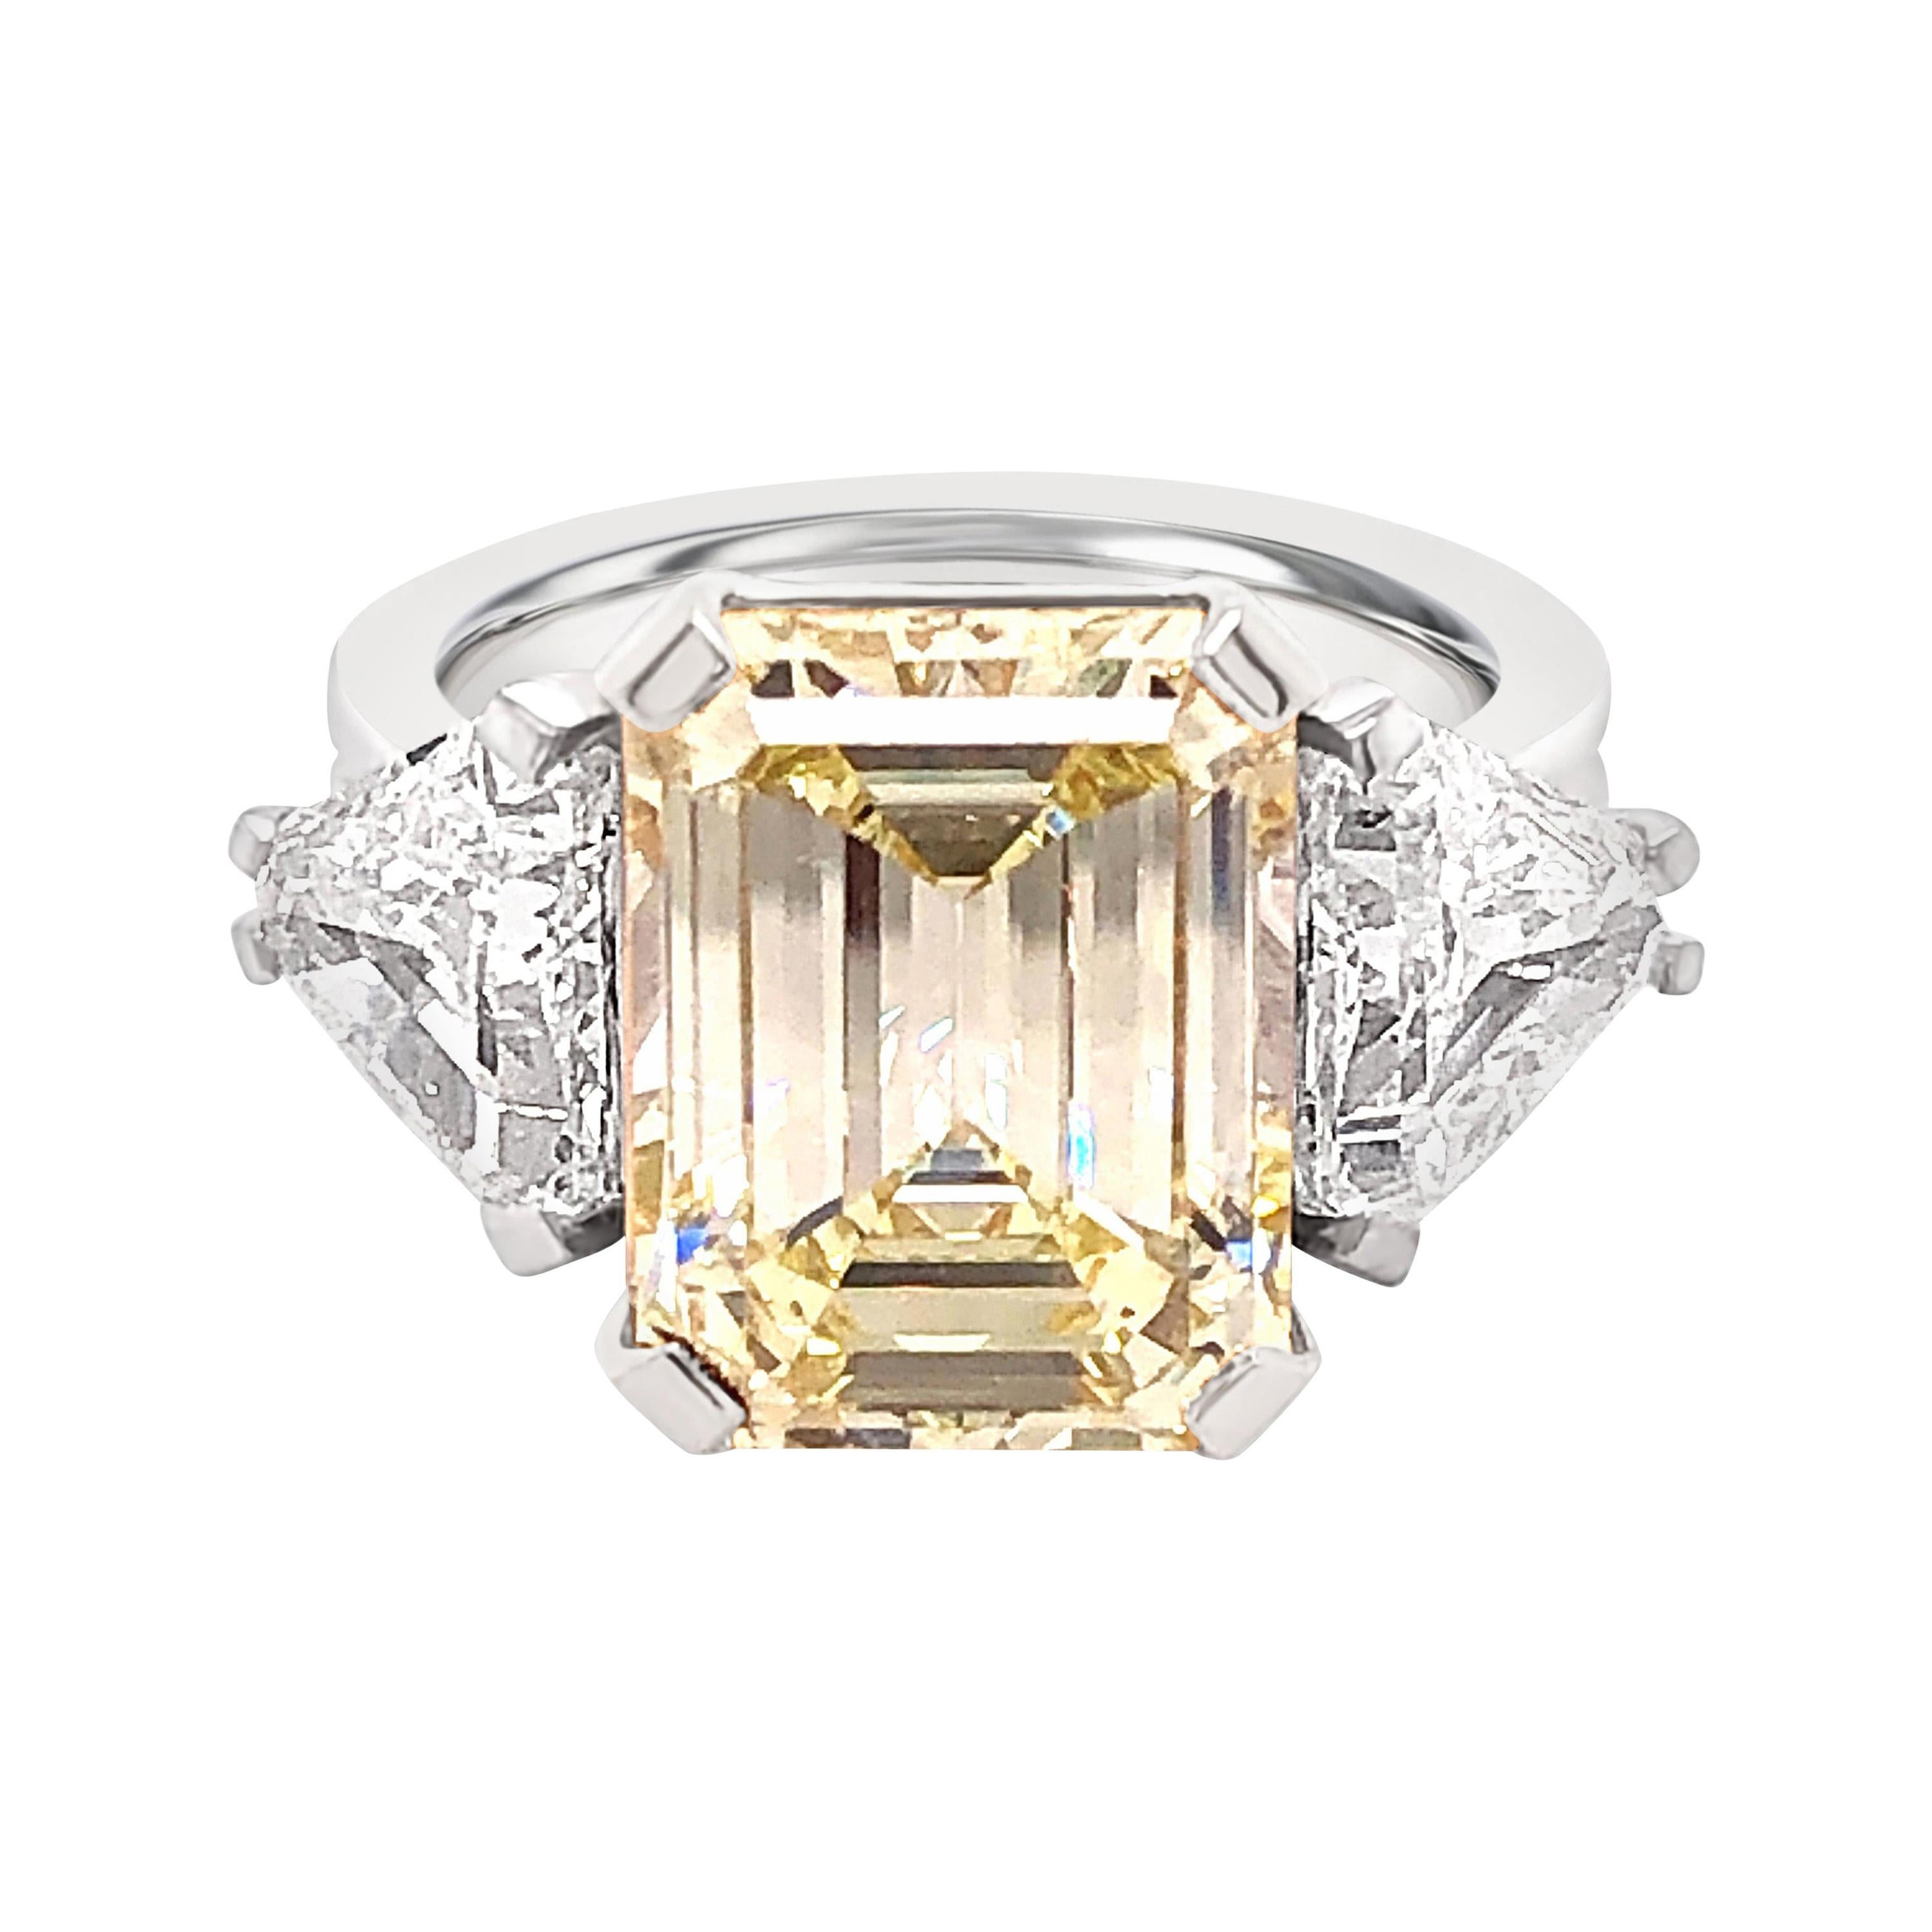 Berca GIA Certified, 5.73k Light Yellow Diamond 2.3k White Diamond Ring